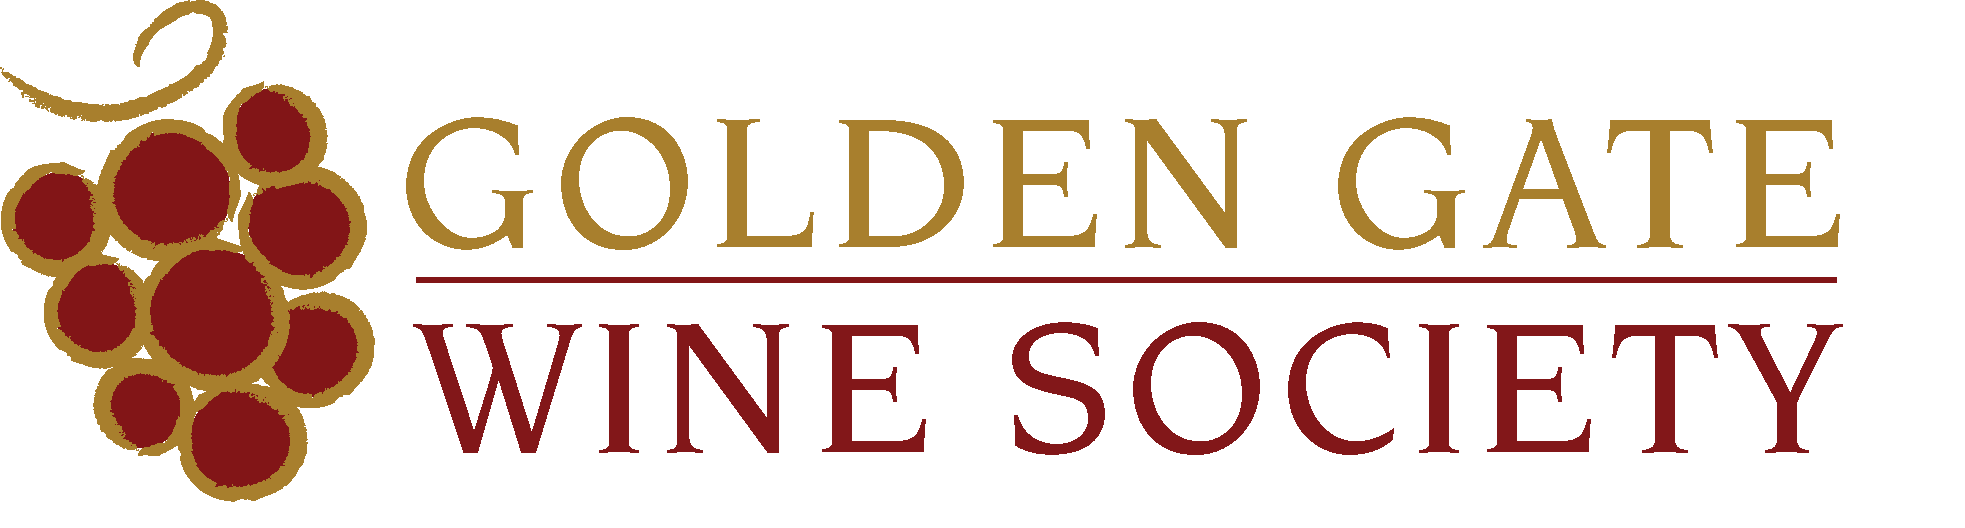 Golden Gate Wine Society